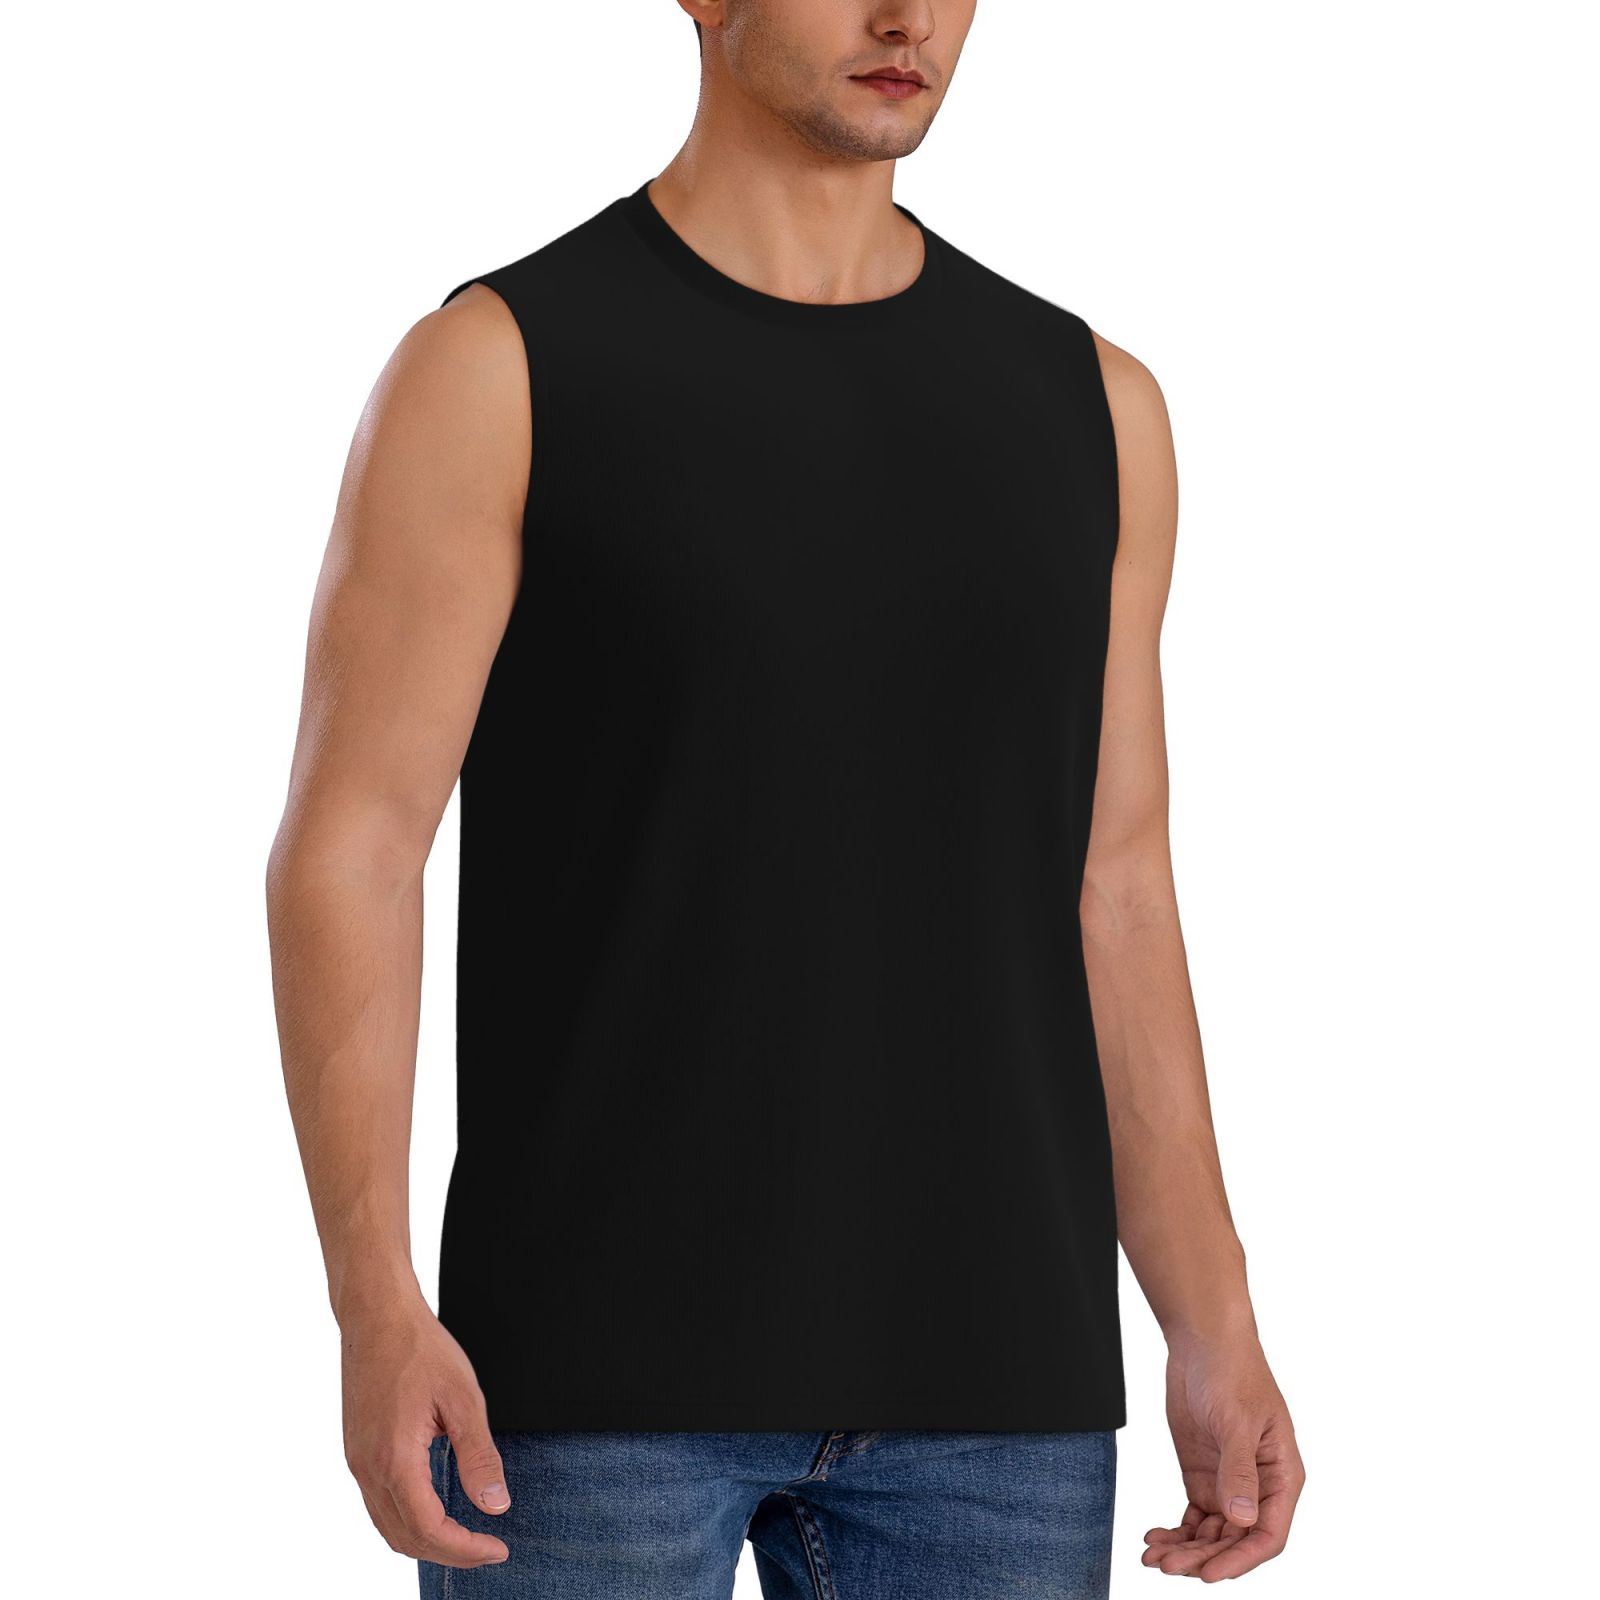 Men's Sleeveless T-shirt